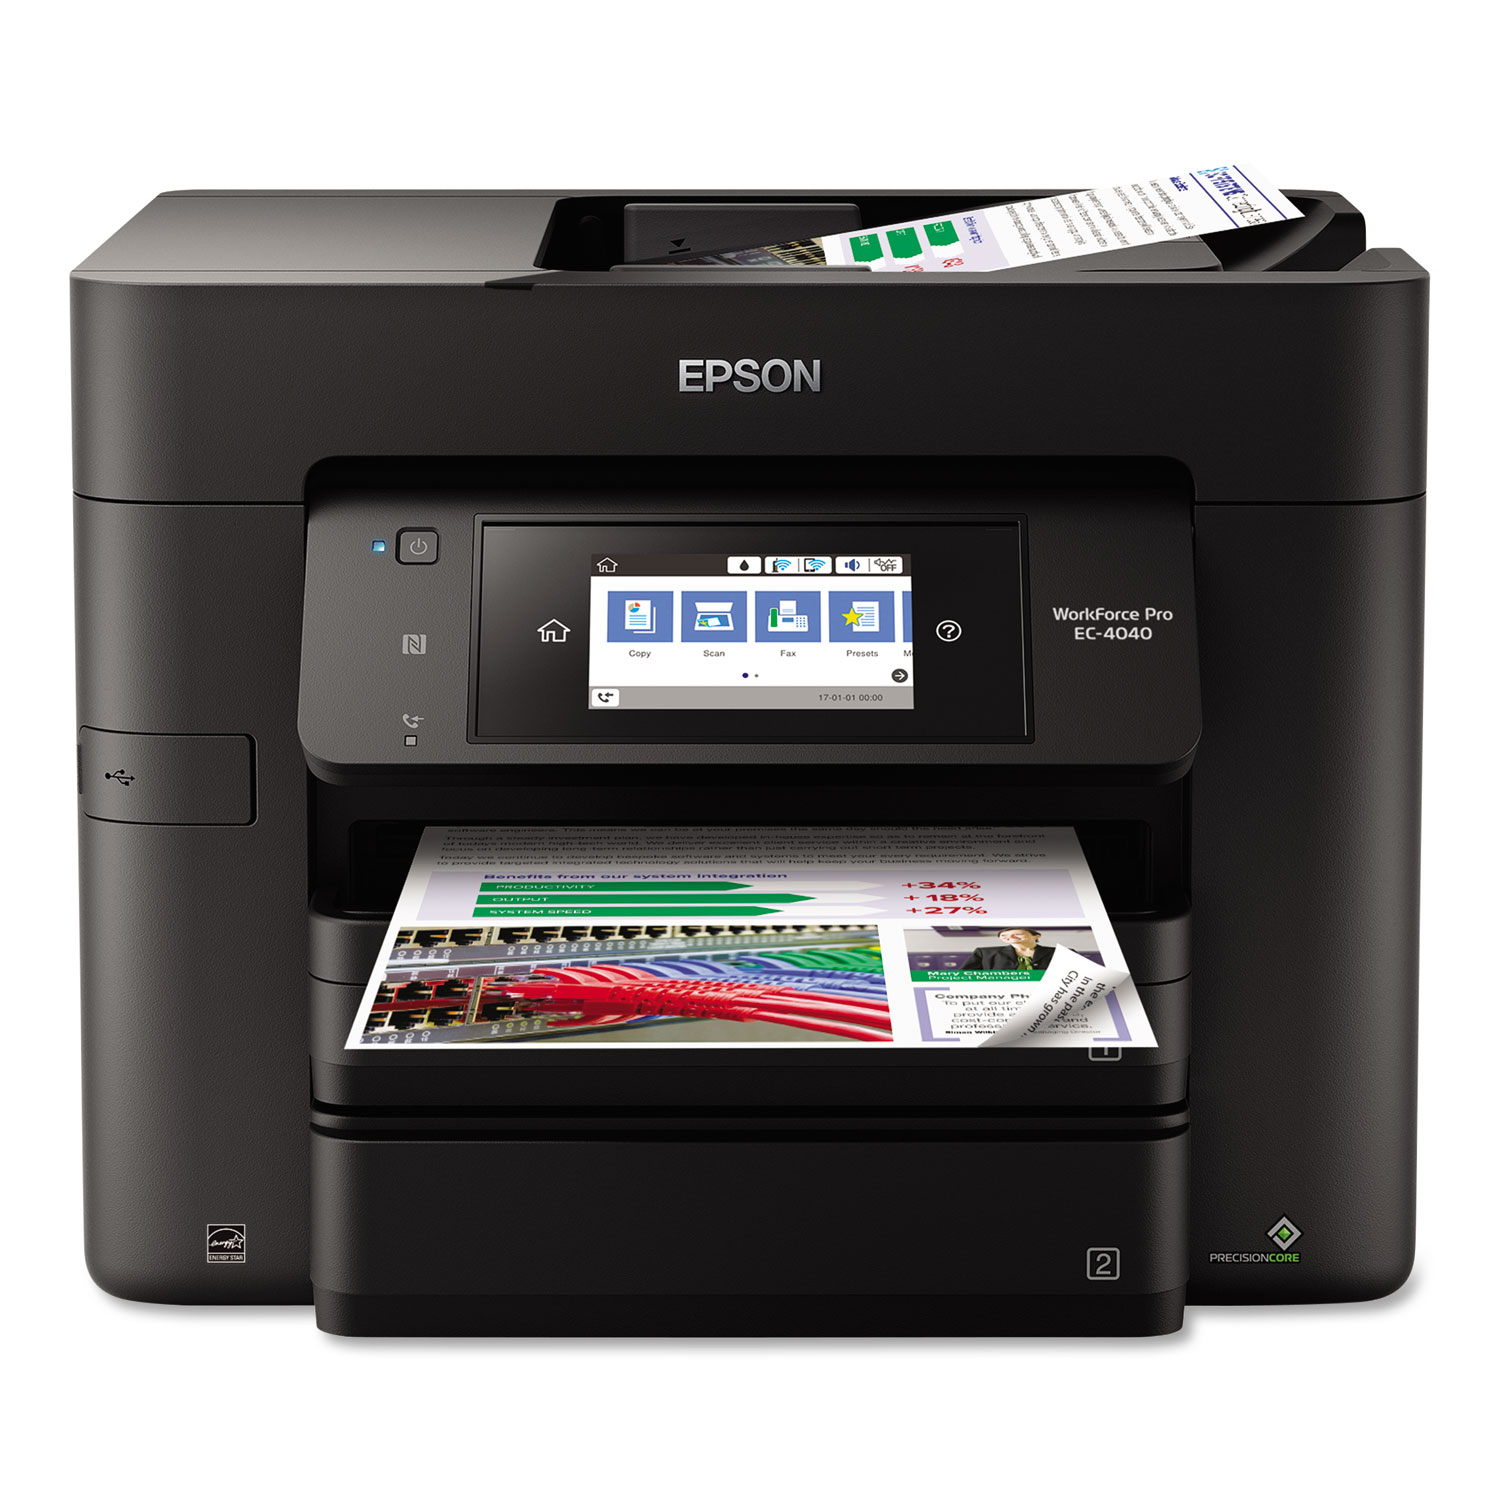  Epson C11CF75203 WorkForce Pro EC-4040 Color Multifunction Printer, Copy/Fax/Print/Scan (EPSC11CF75203) 